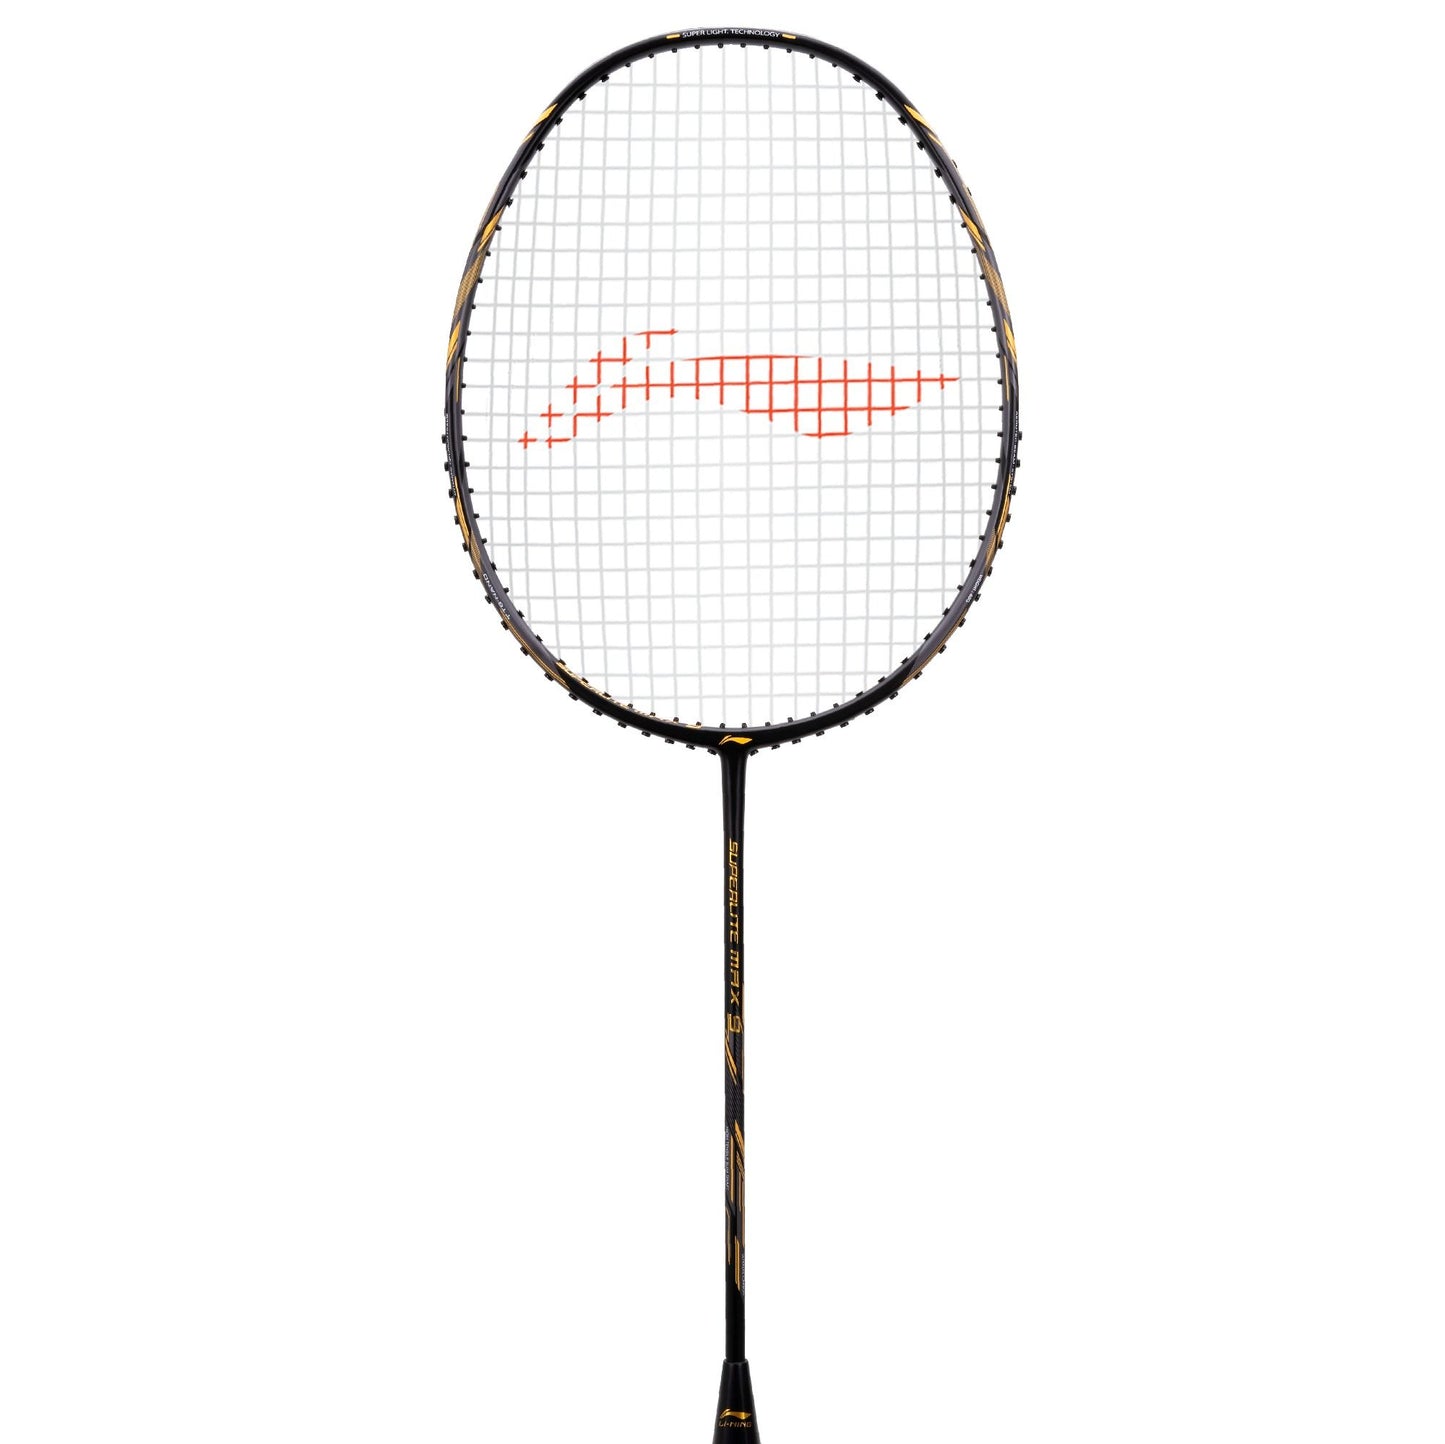 Li-Ning G-Force Superlite Max 9 (Black/Gold) Badminton Racket